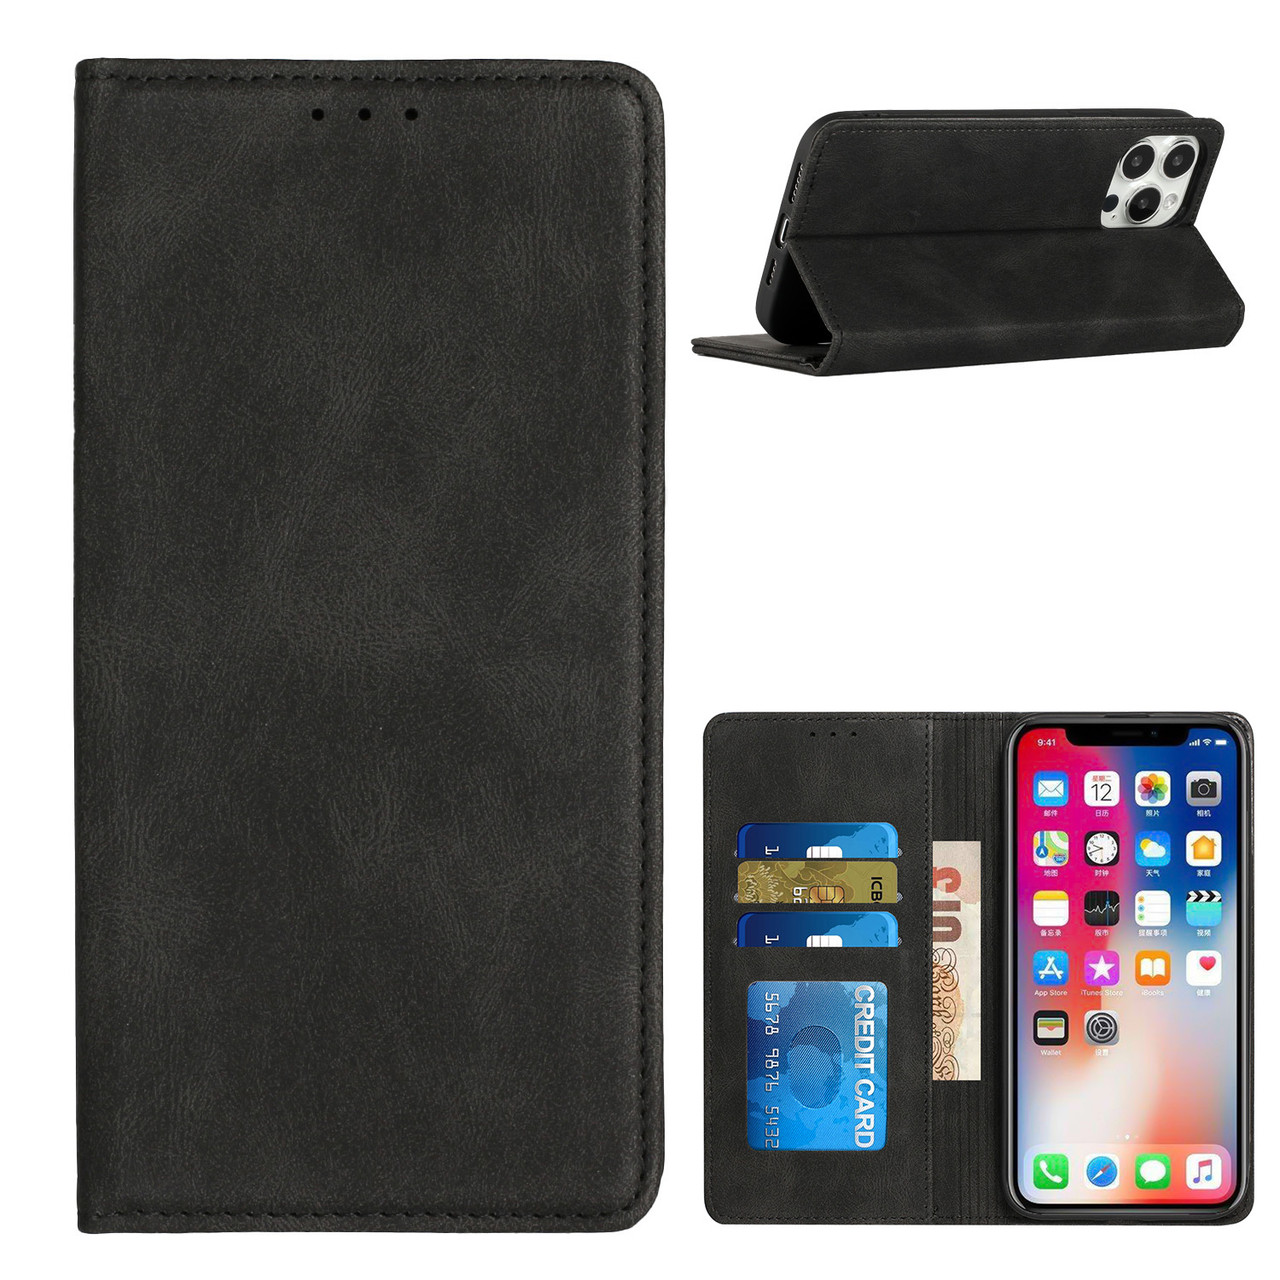 Apple Leather Folio for iPhone 11 Pro Max, Black